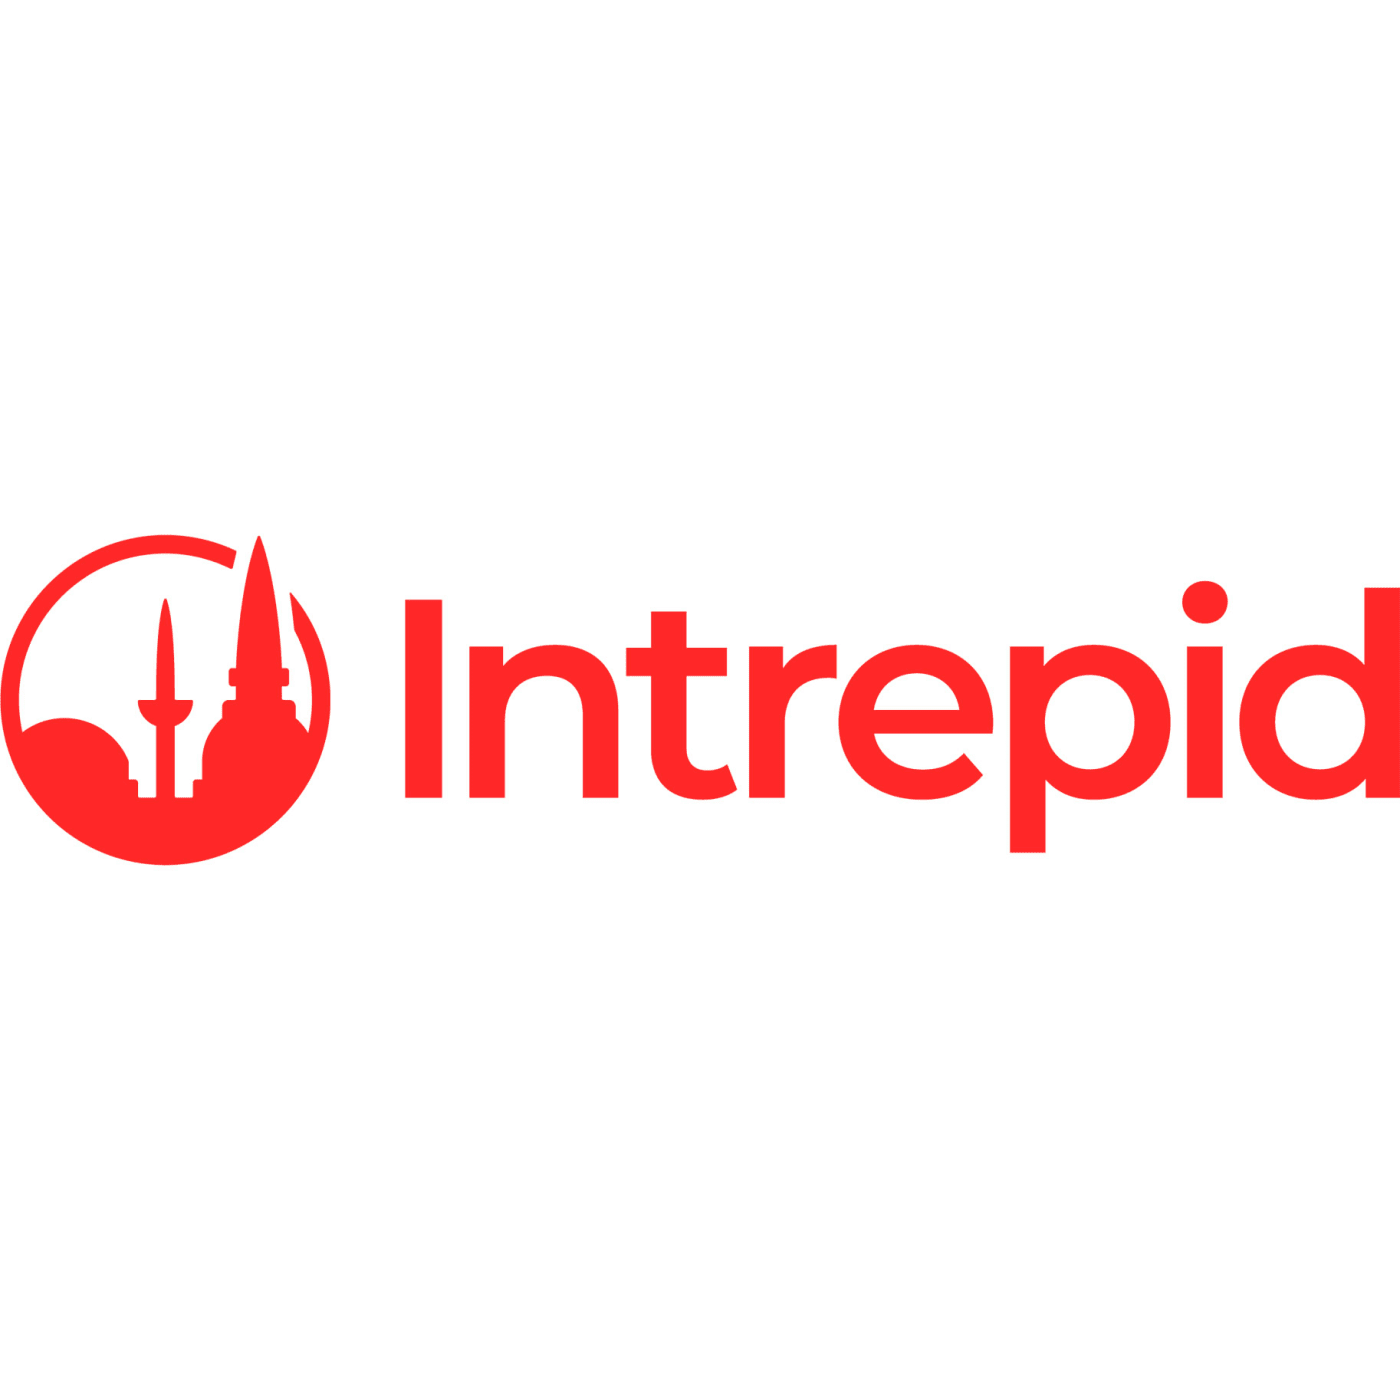 Intrepid logo